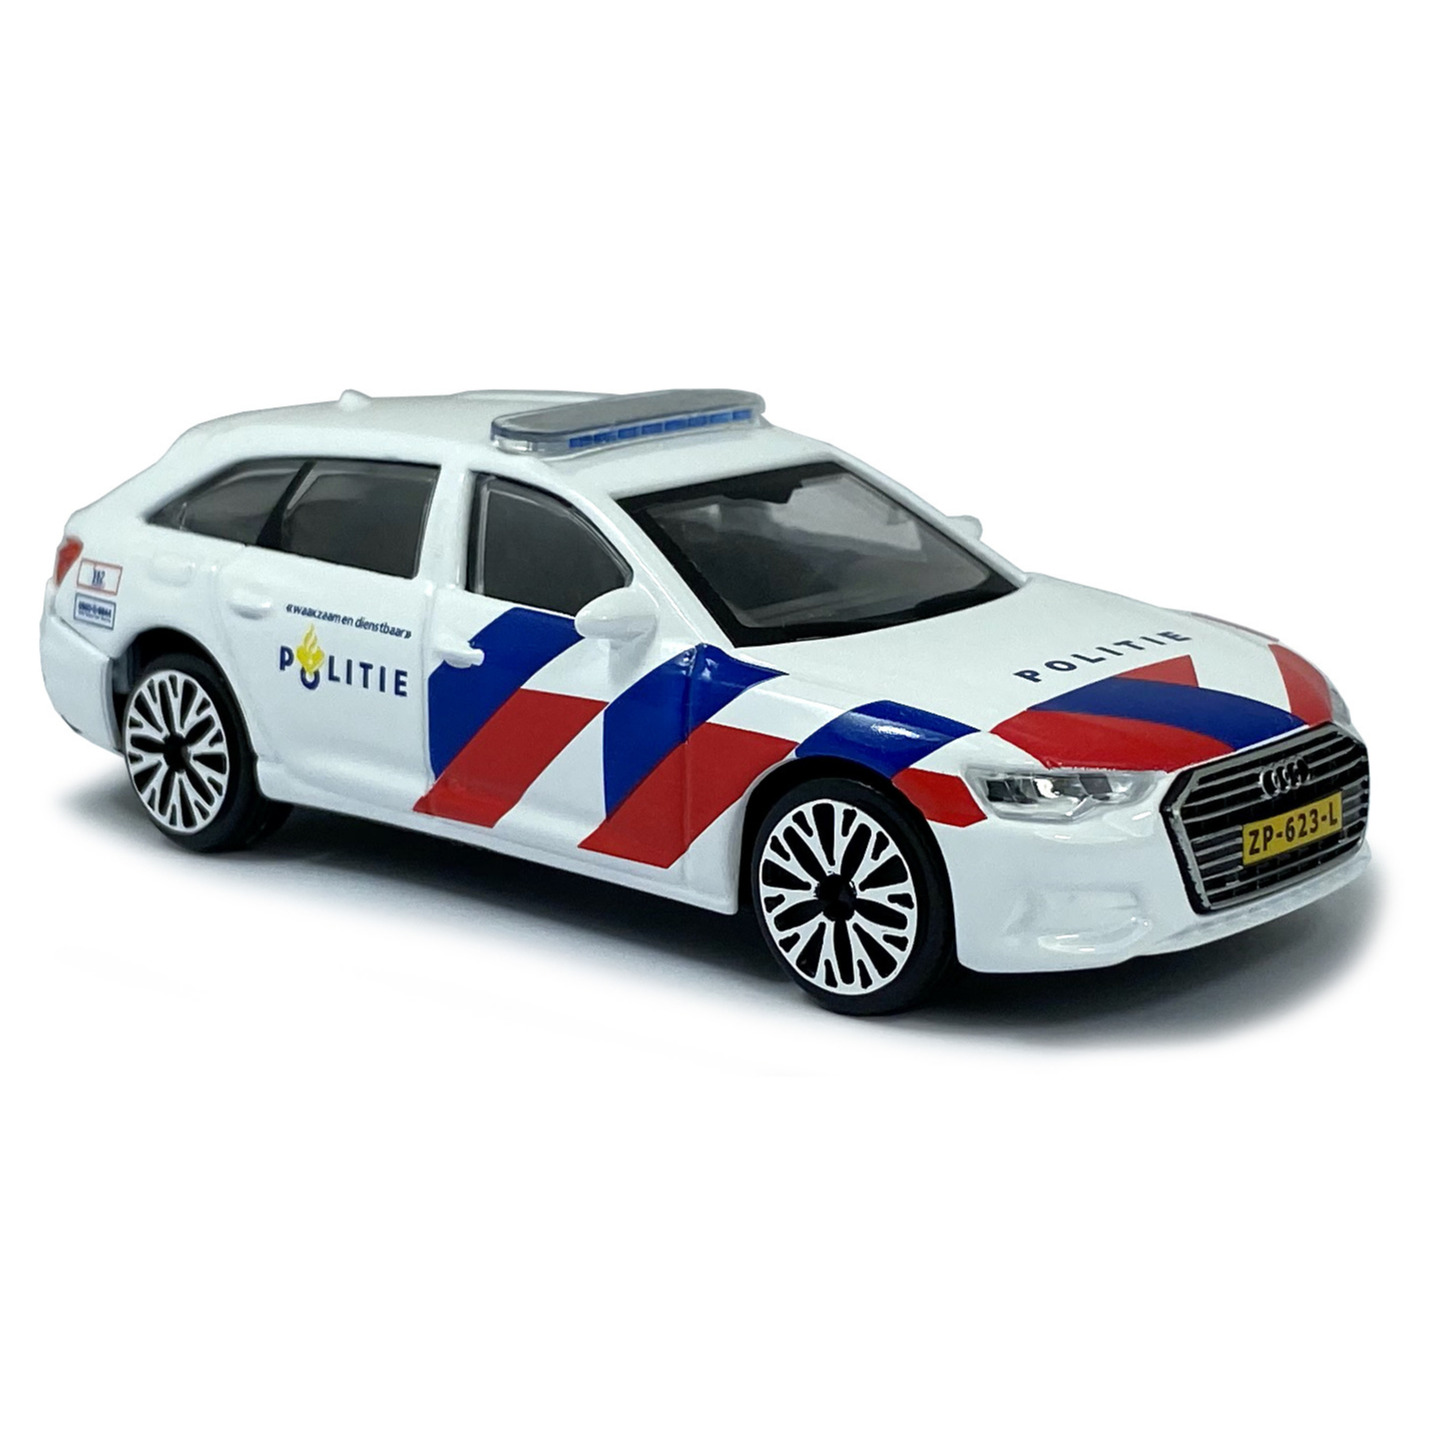 Modelauto Audi A6 Politie Nederland 2019 schaal 1:43/11 x 4 x 3 cm